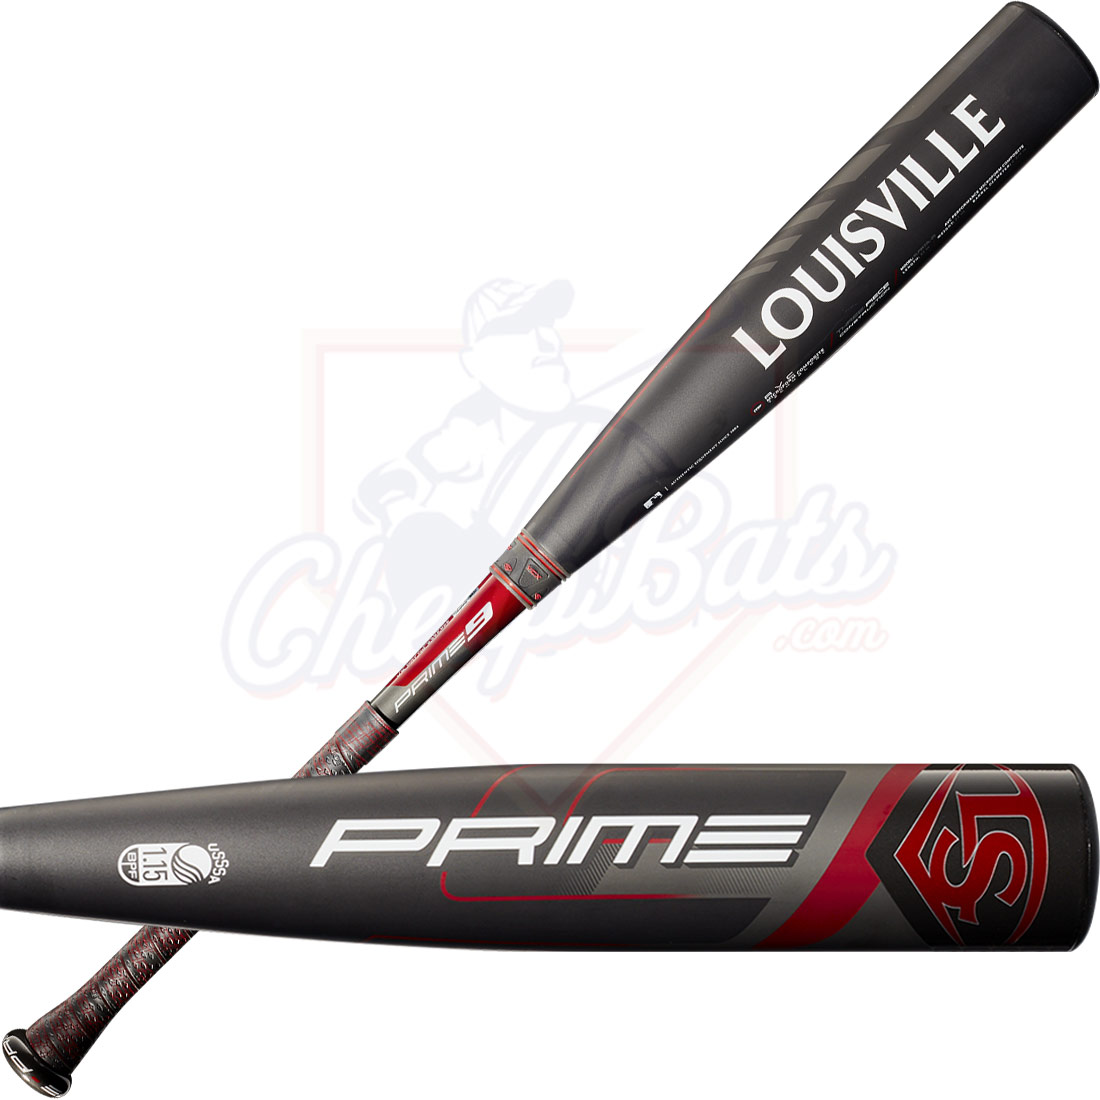 2020 Louisville Slugger Prime Youth USSSA Baseball Bat -8oz WTLSLP9X820